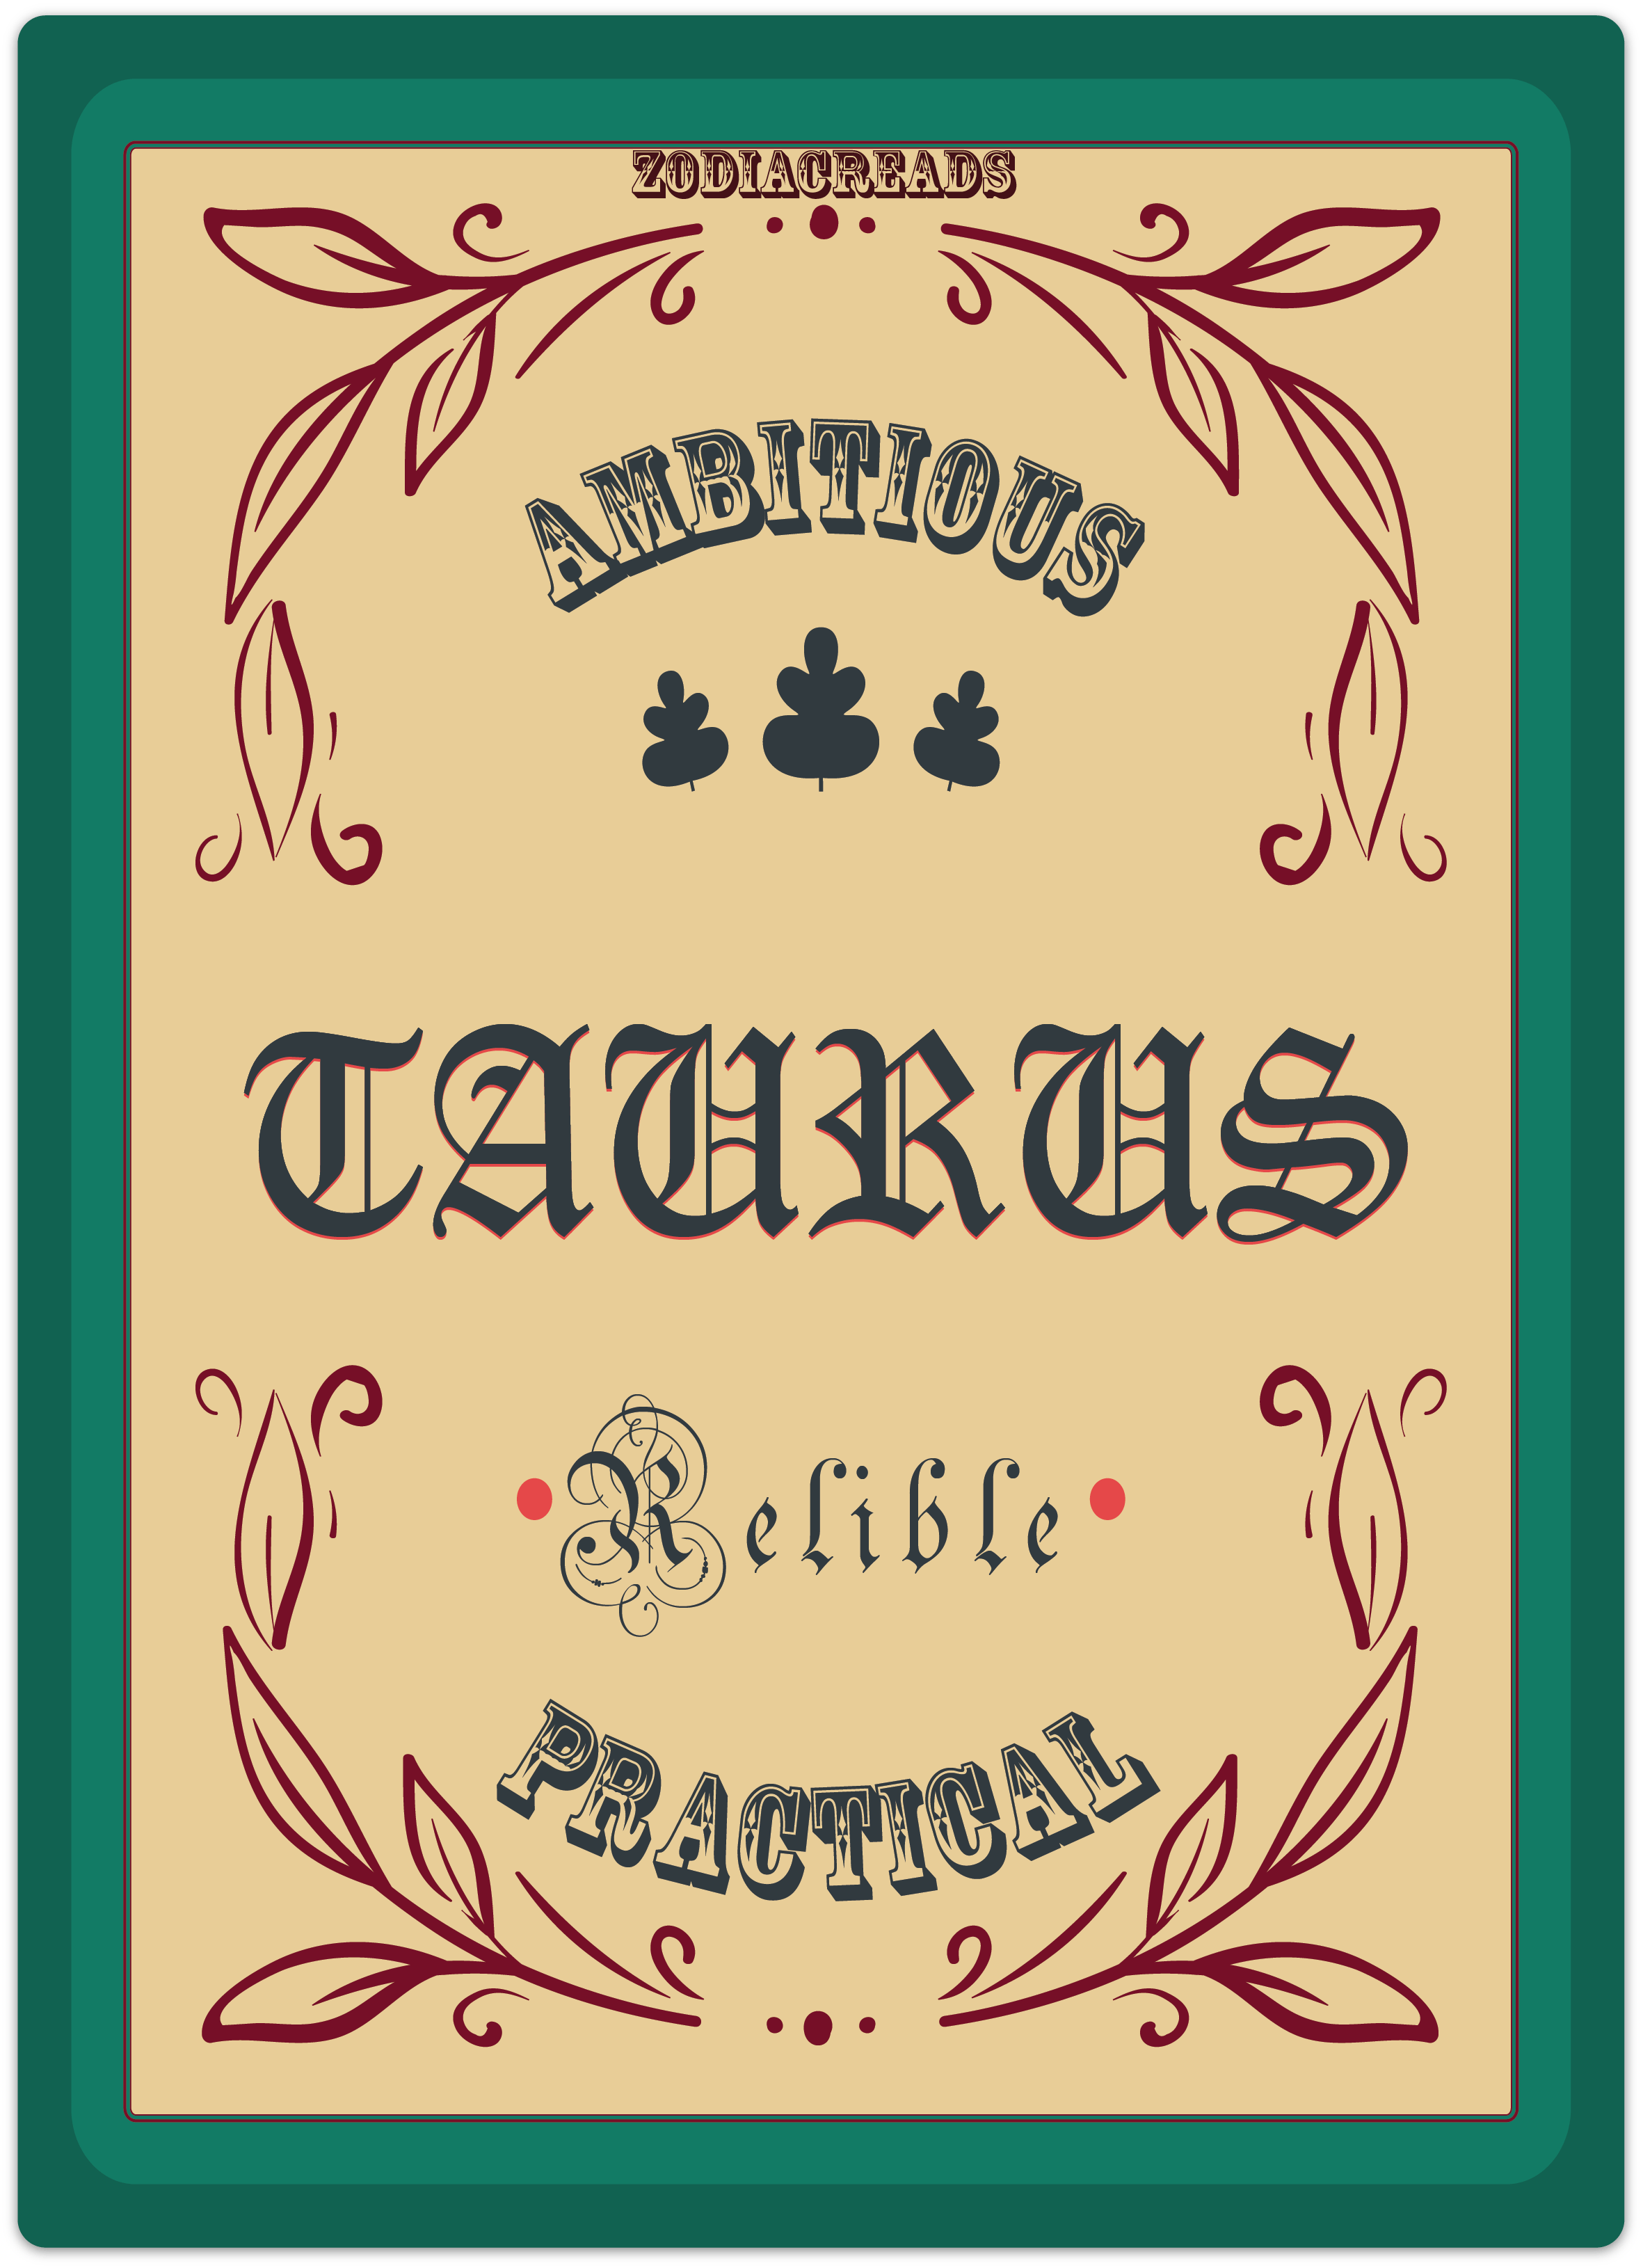 Taurus_Zodiacreads